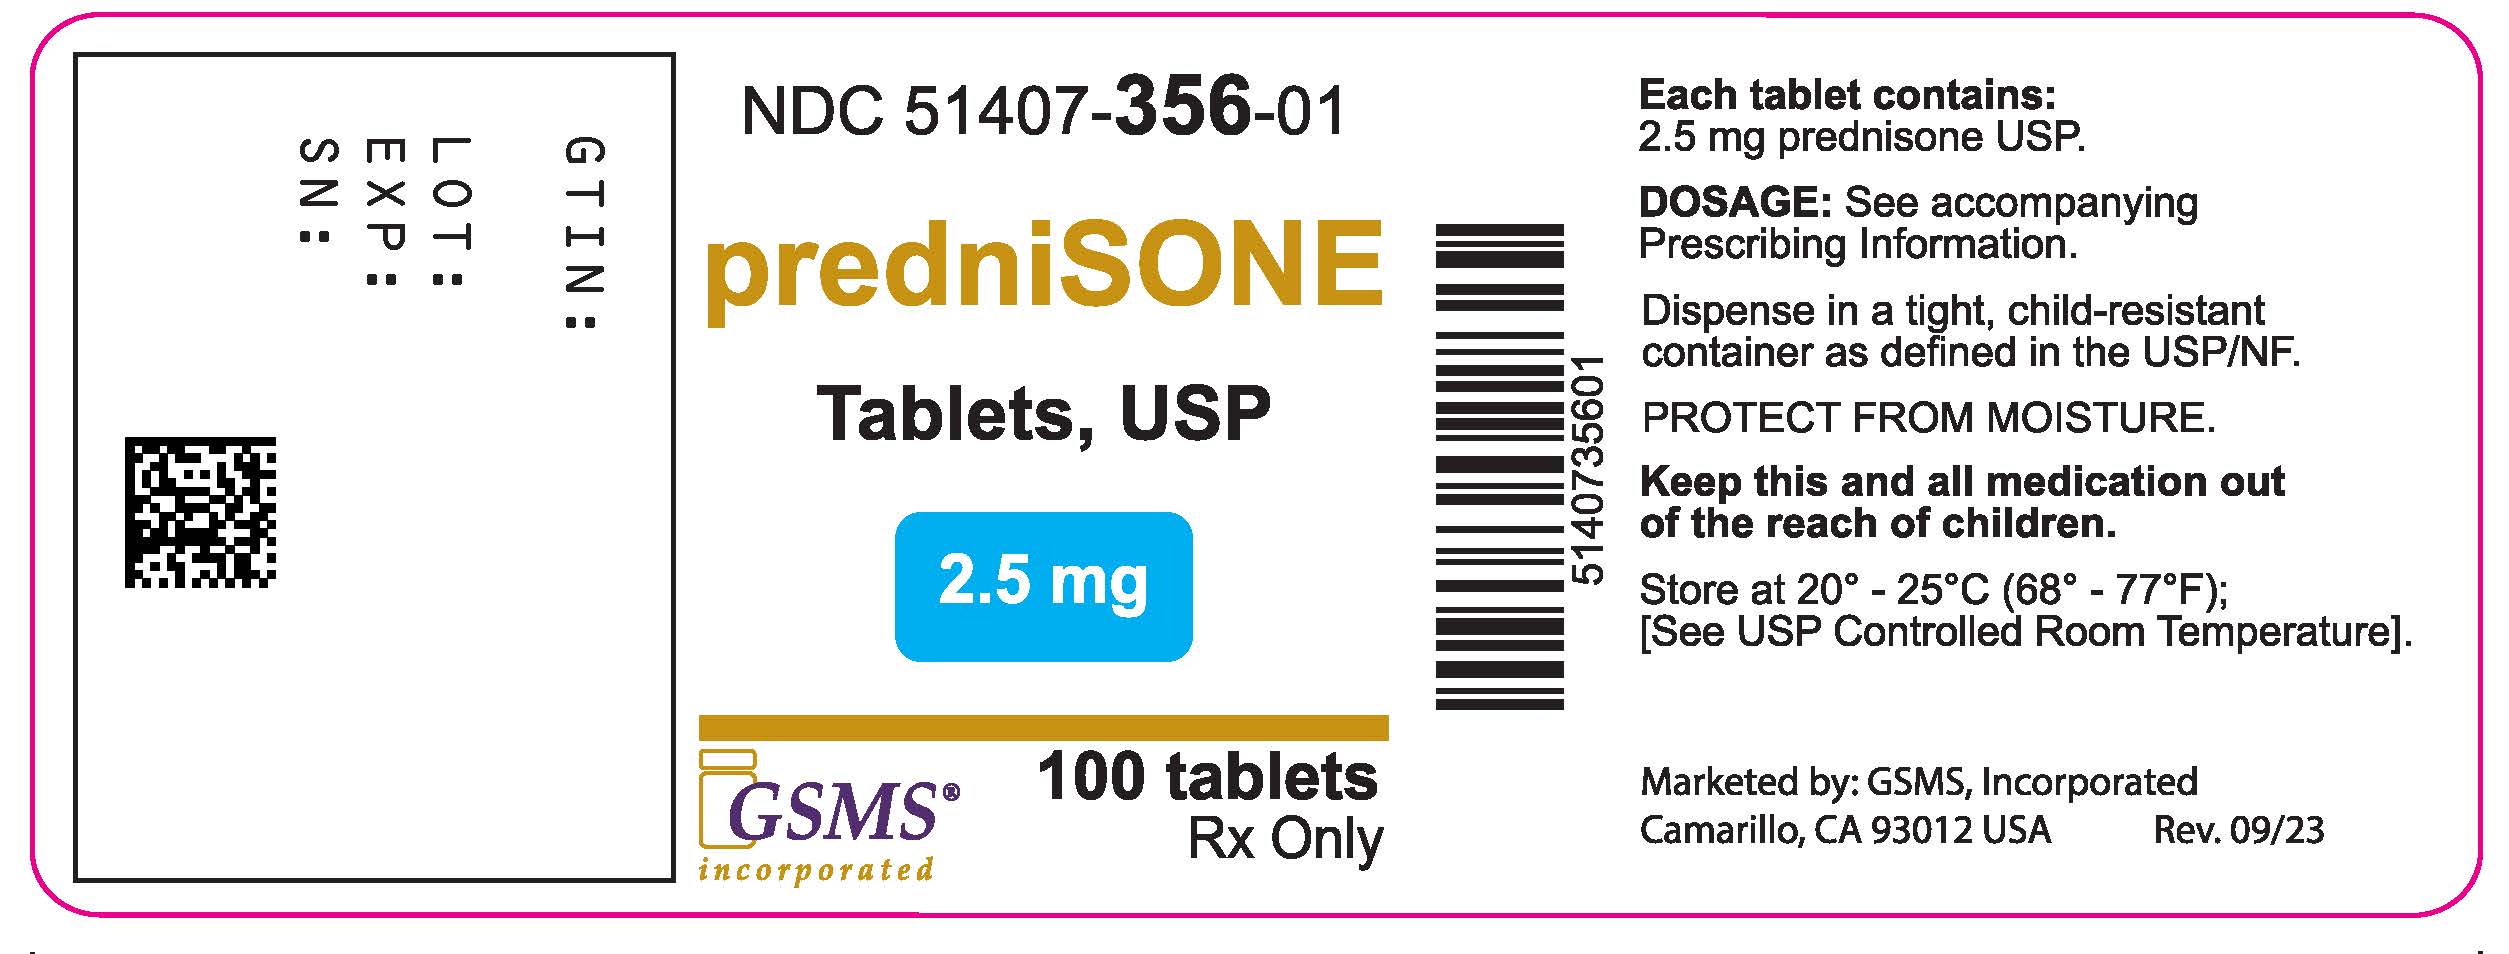 51407-356-01LB - Prednisone Tablets - Rev. 0923.jpg